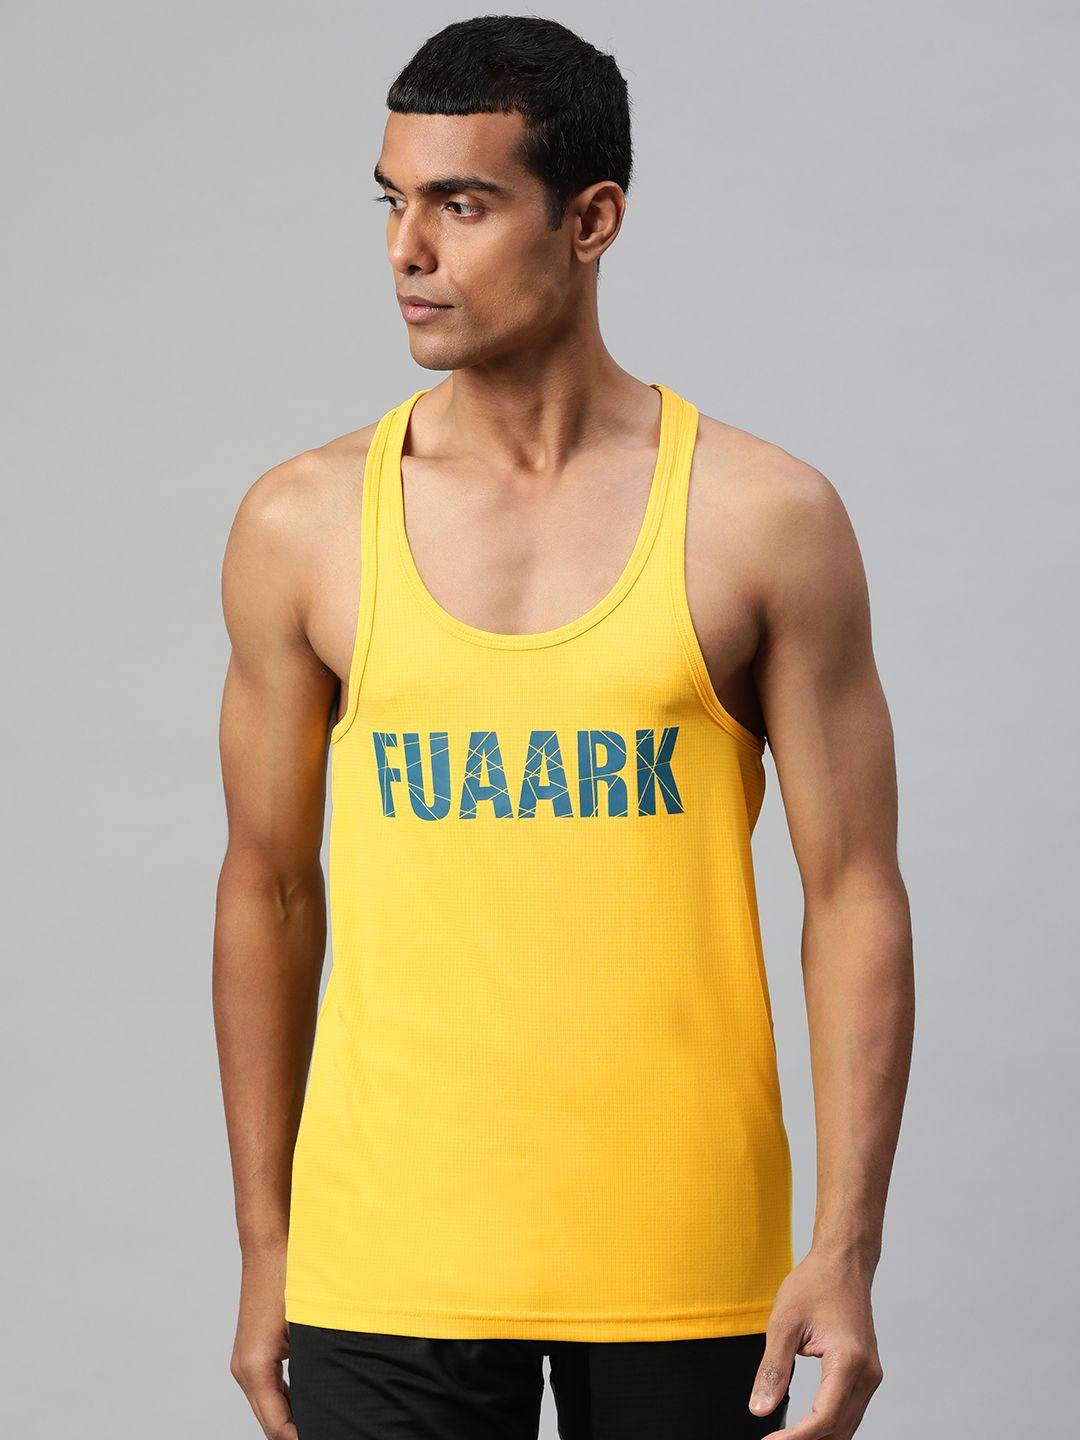 fuaark-men-yellow-&-blue-brand-logo-printed-sports-and-gym-innerwear-vest